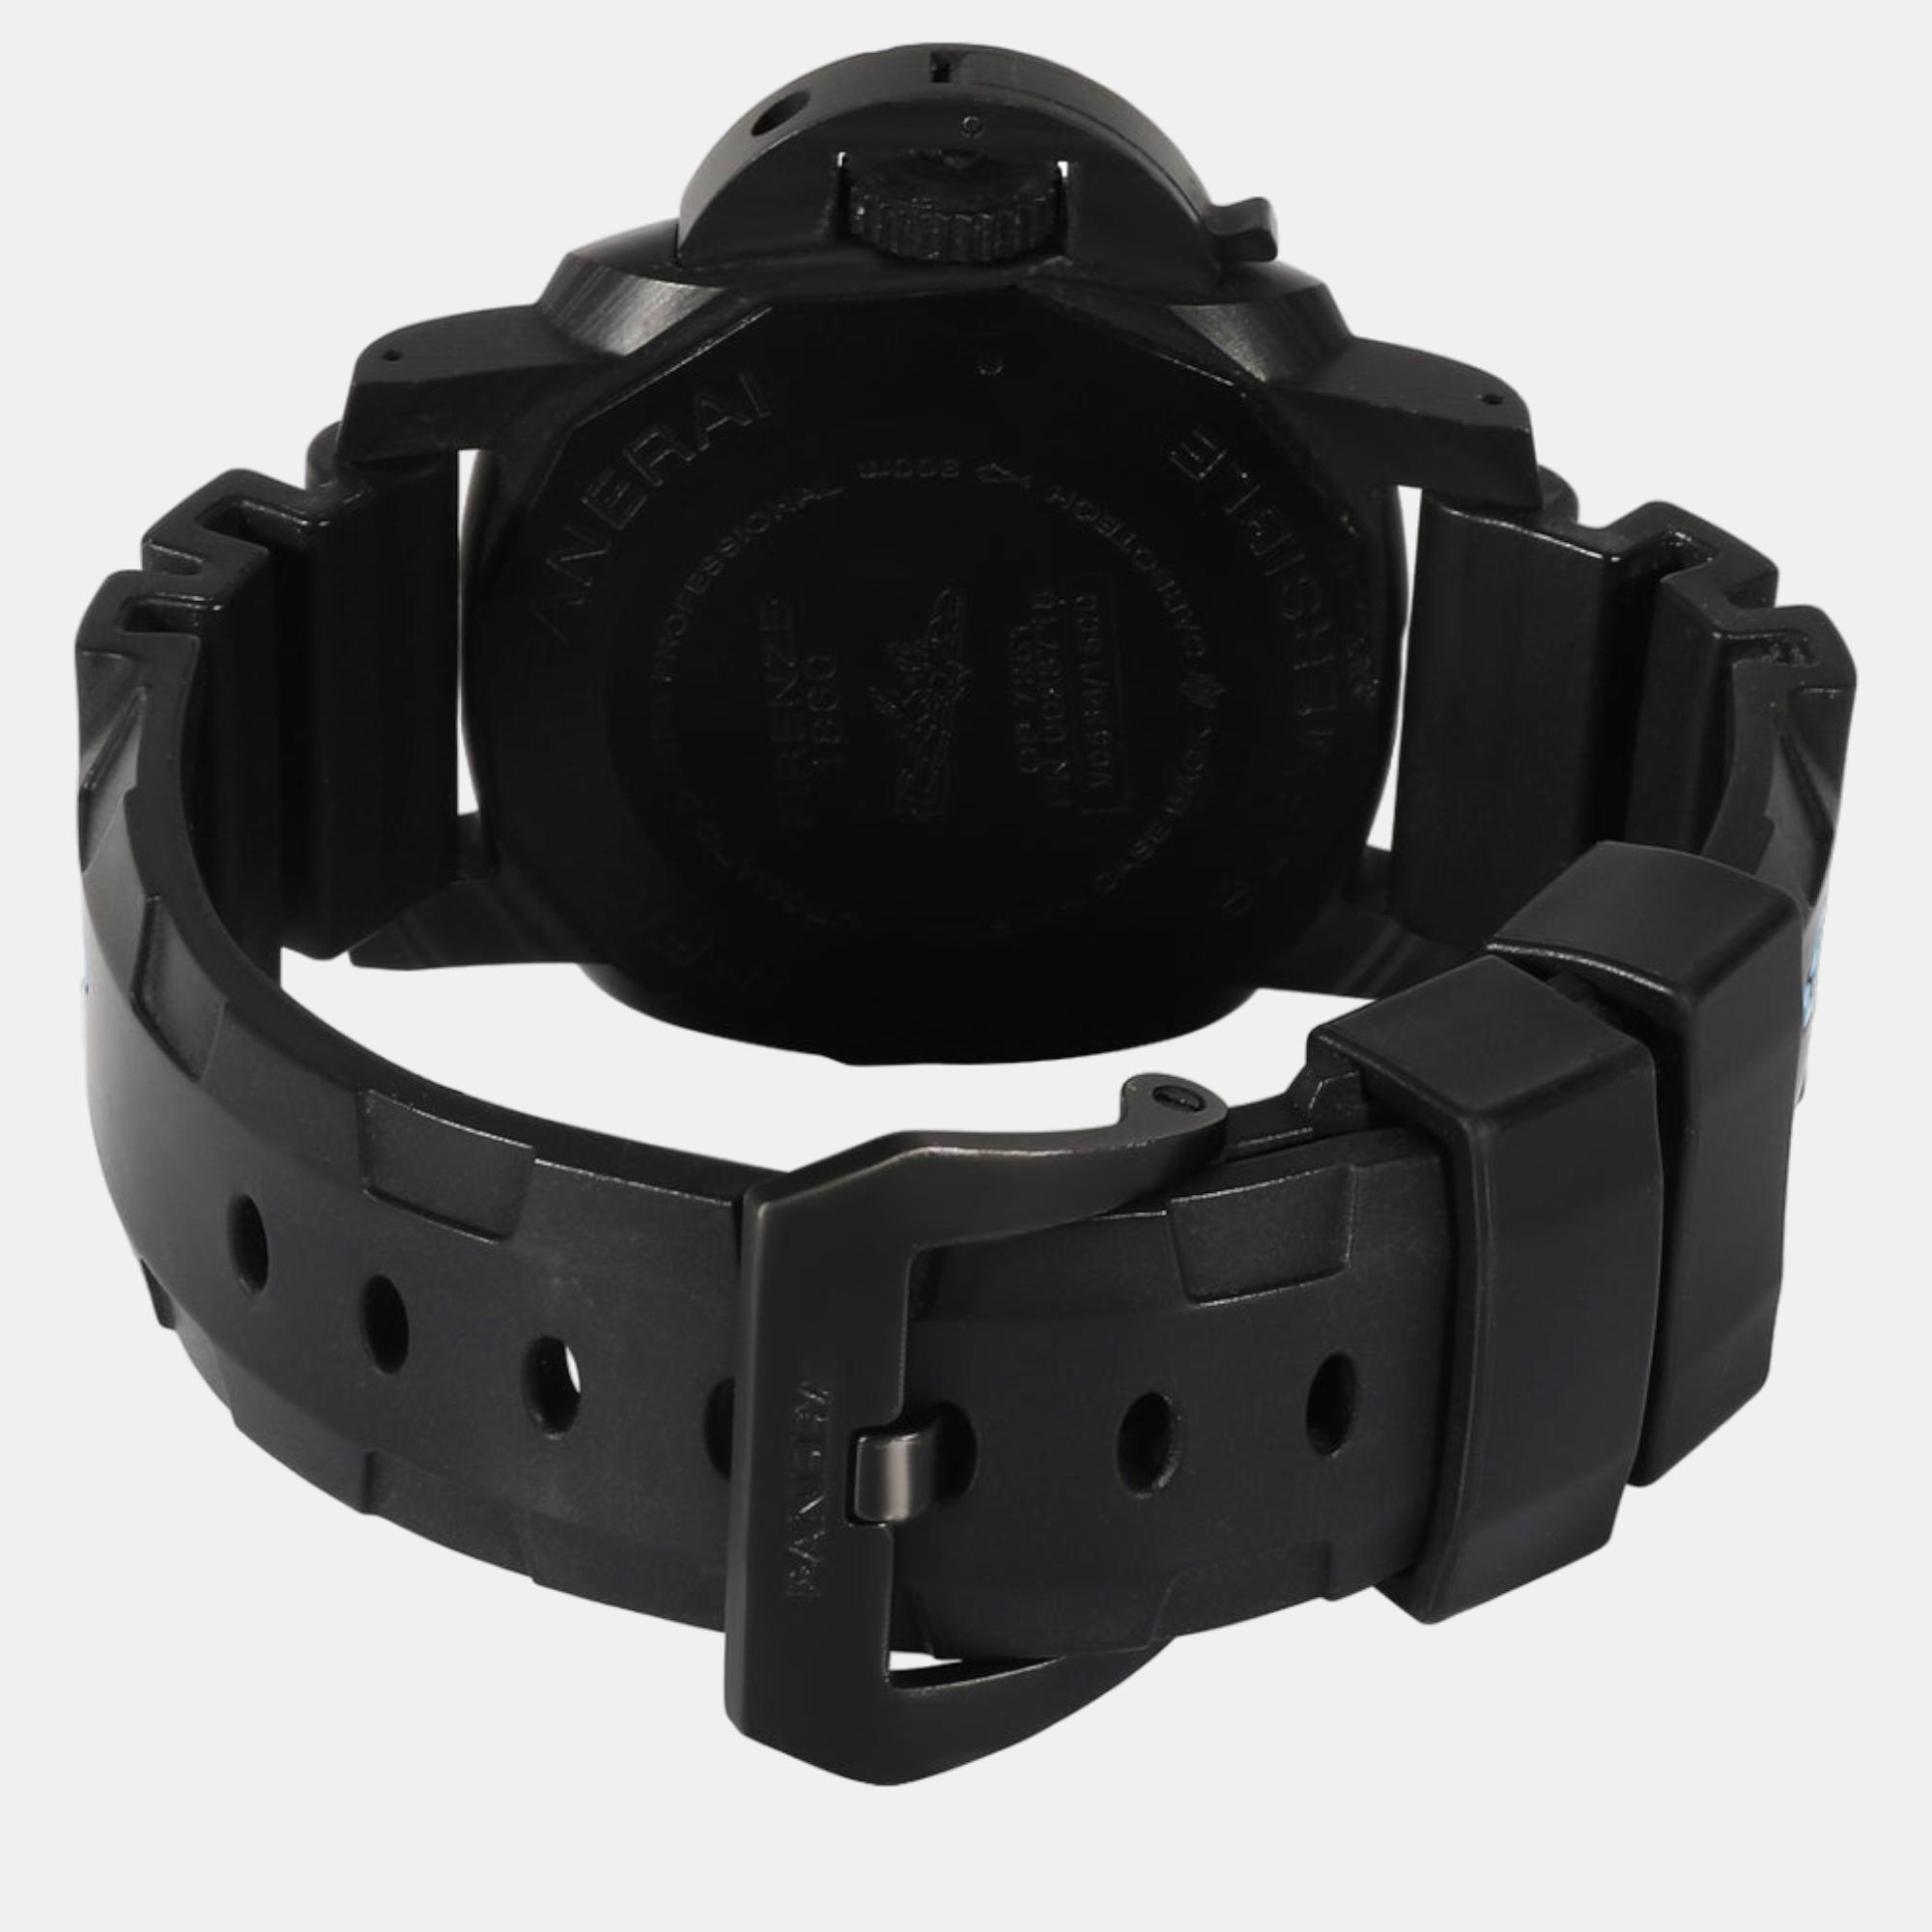 Panerai Black Carbon Fiber Luminor PAM00960 Automatic Men's Wristwatch 42 Mm